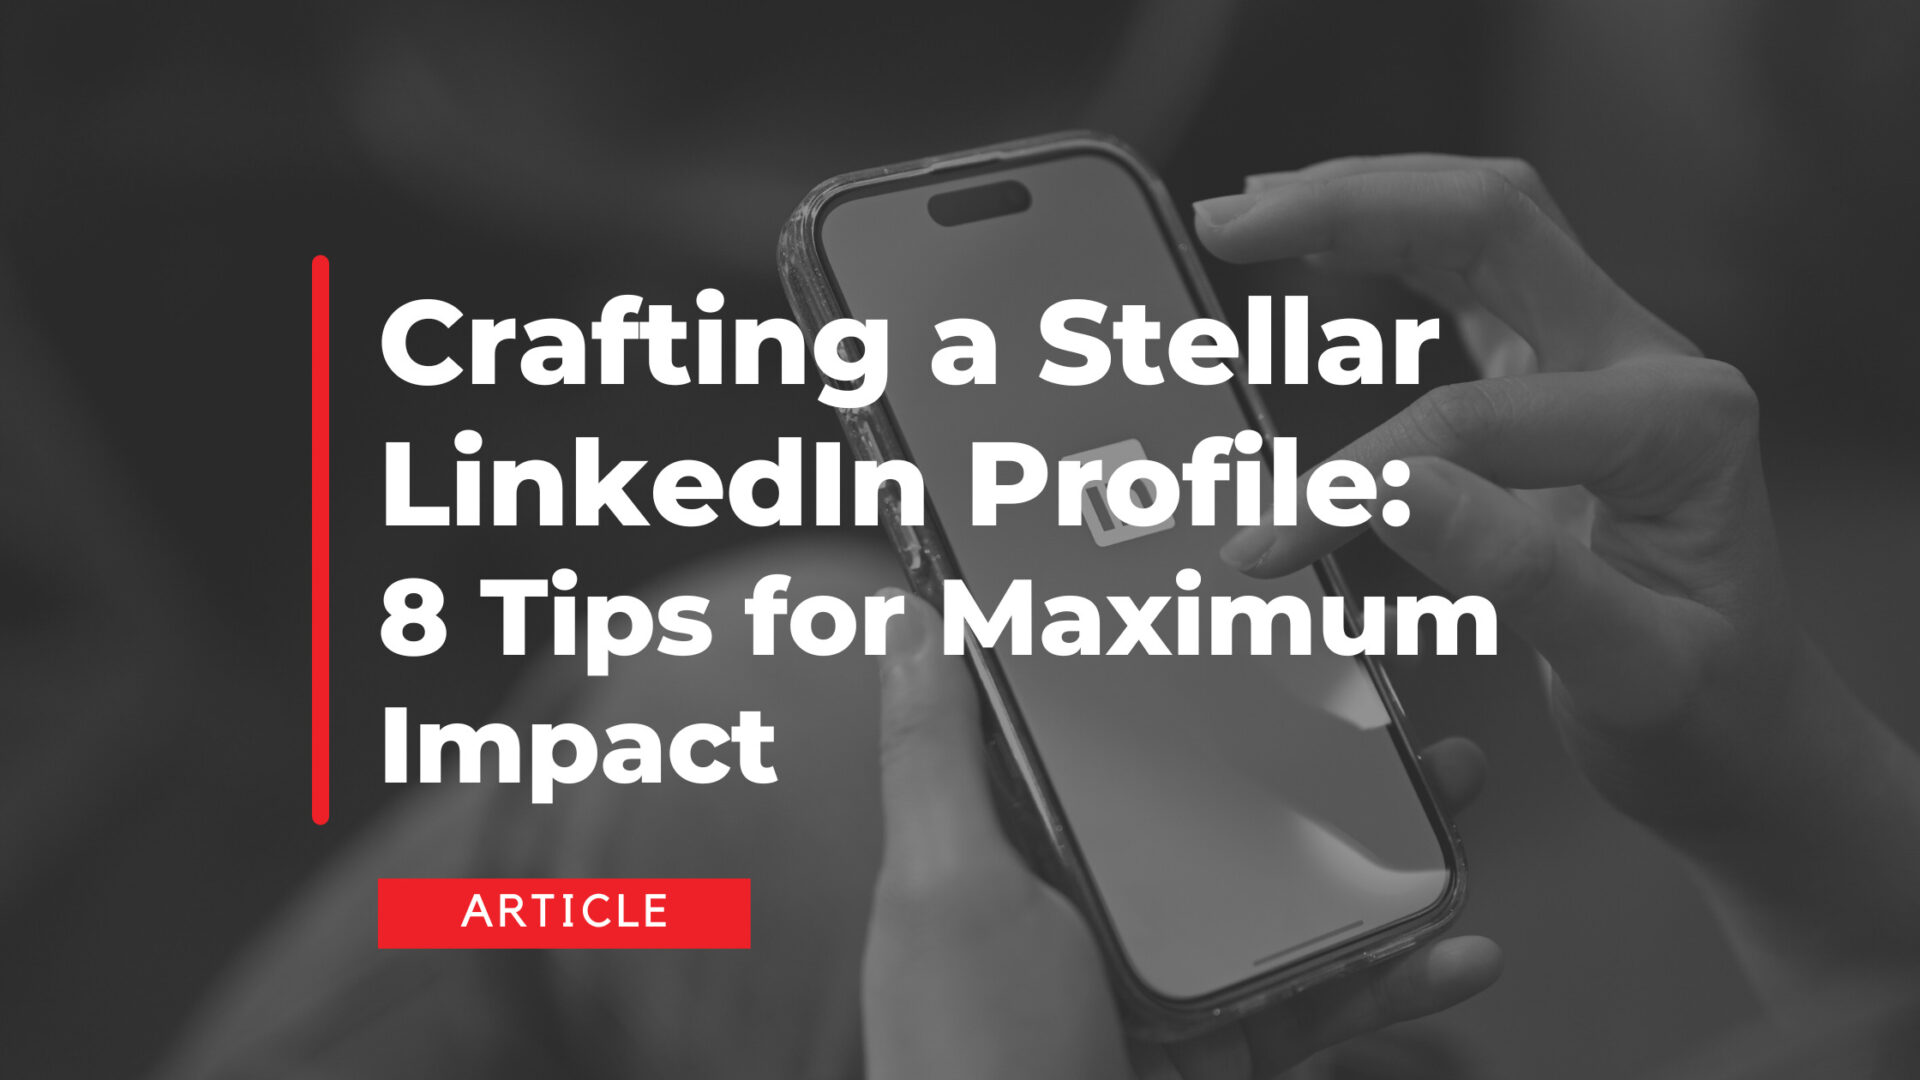 Crafting a Stellar LinkedIn Profile: 8 Tips for Maximum Impact